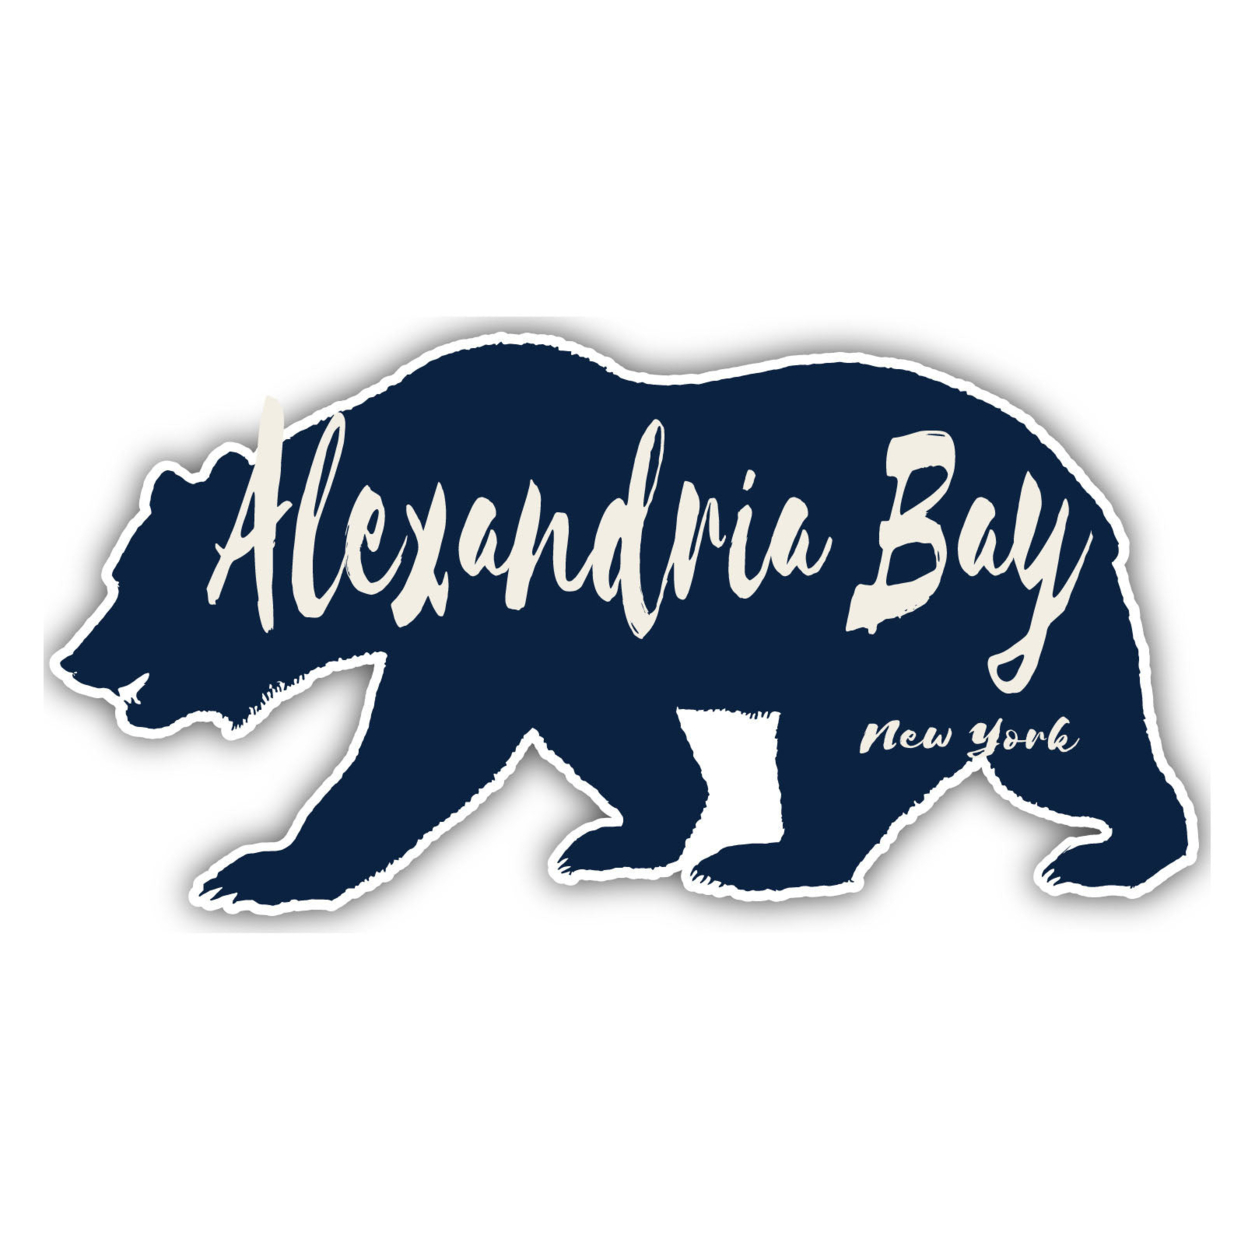 Alexandria Bay New York Souvenir Decorative Stickers (Choose Theme And Size) - Single Unit, 6-Inch, Tent